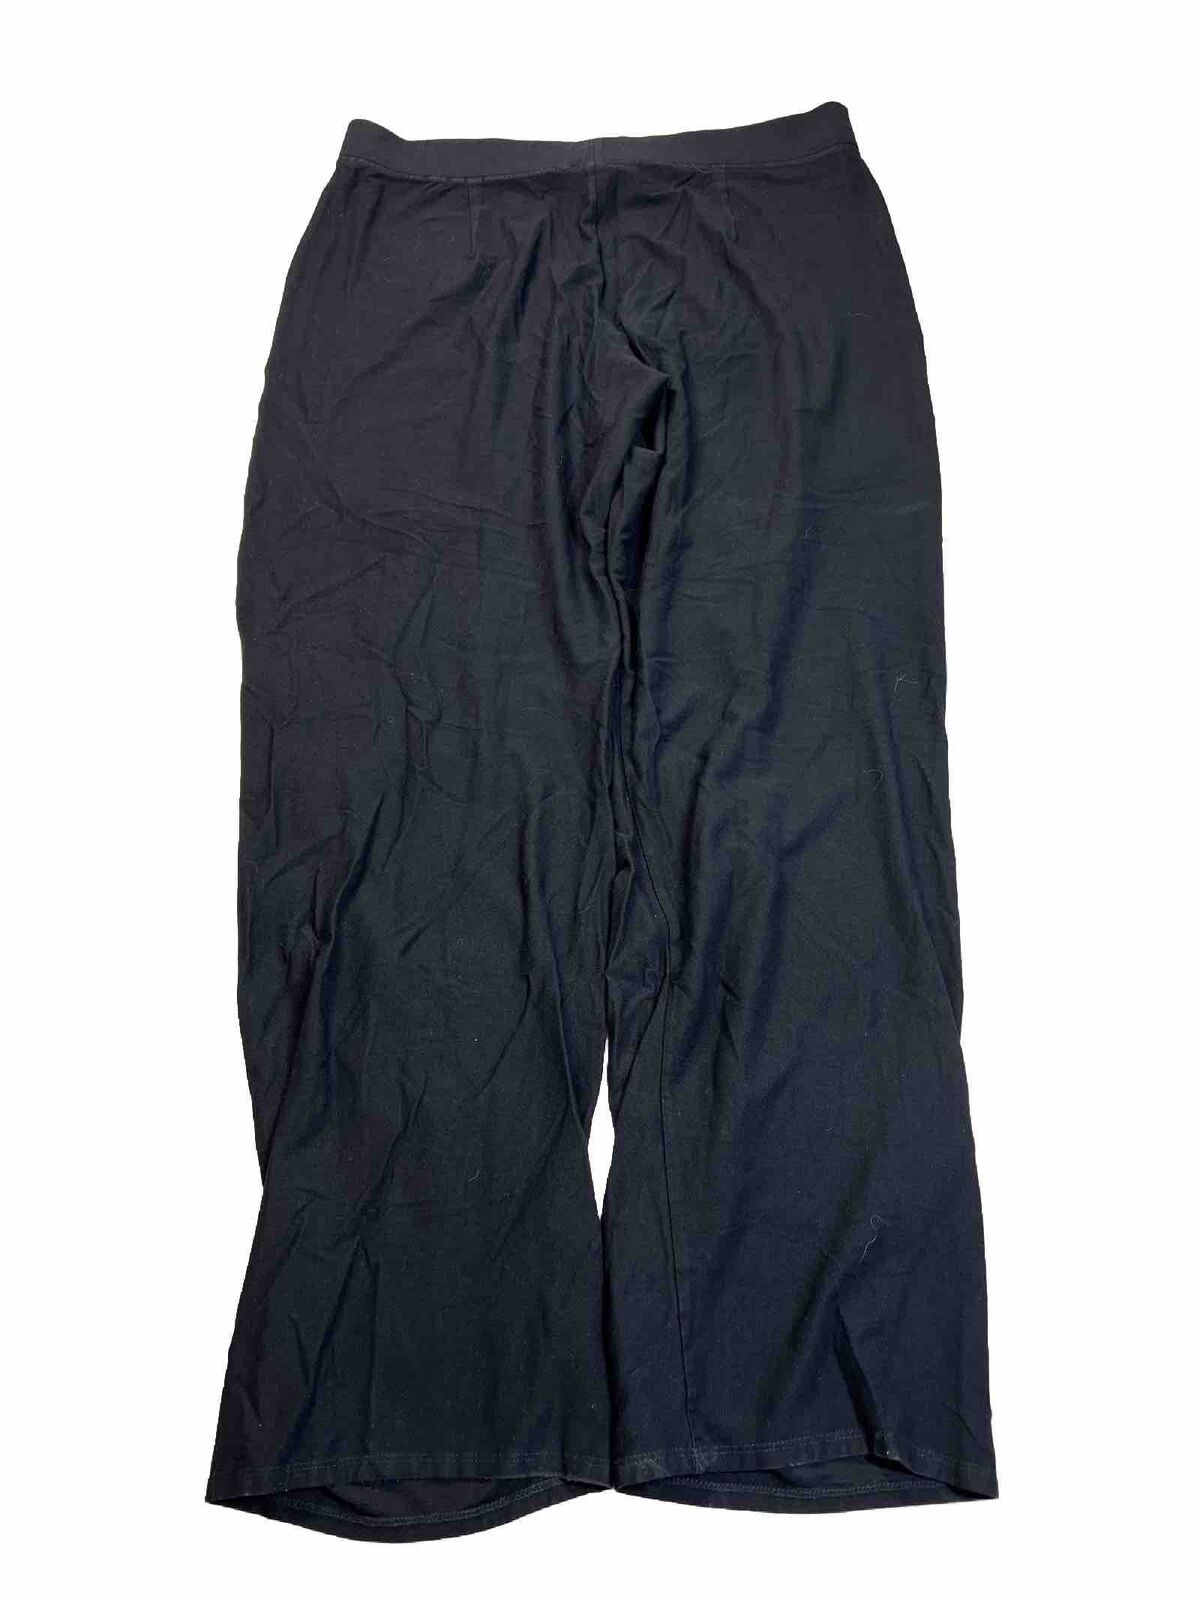 Eileen Fisher Women's Black Stretch Waist Pull On Straight Leg Pants - L